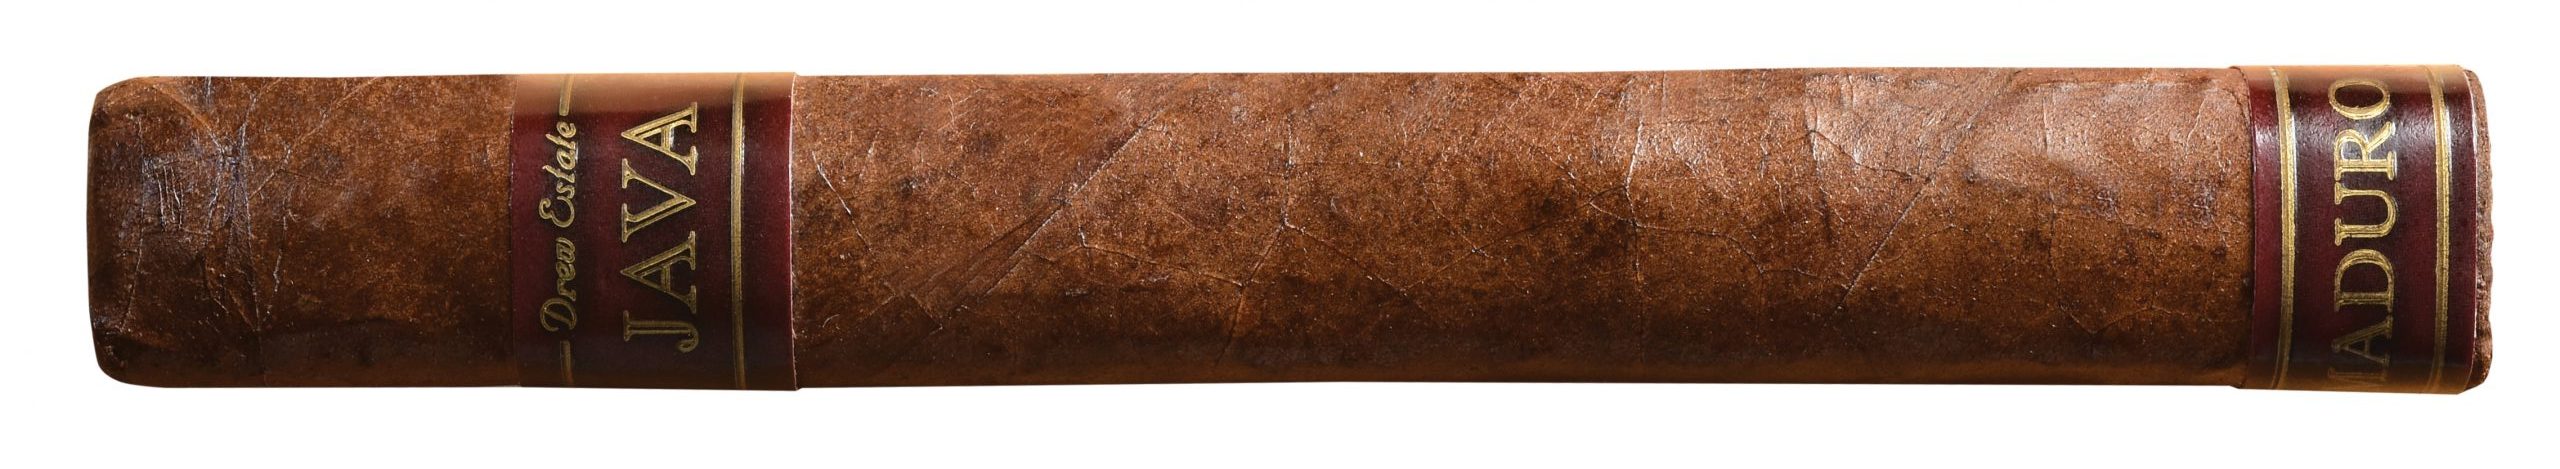 rocky patel java maduro robusto single cigar